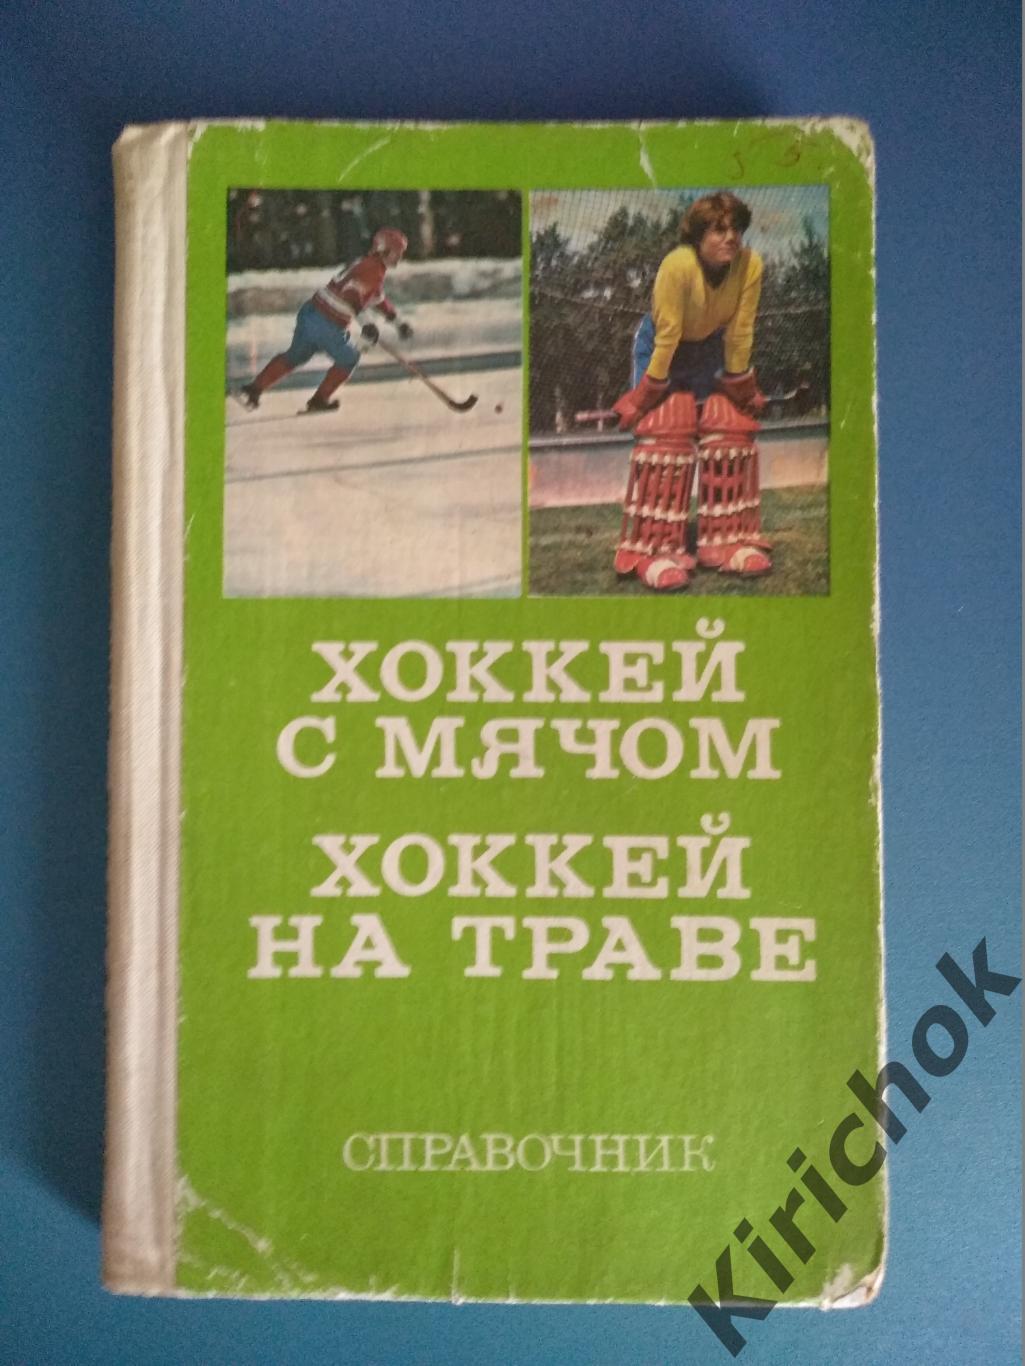 Книга: Хоккей с мячом. Хоккей на траве 1979